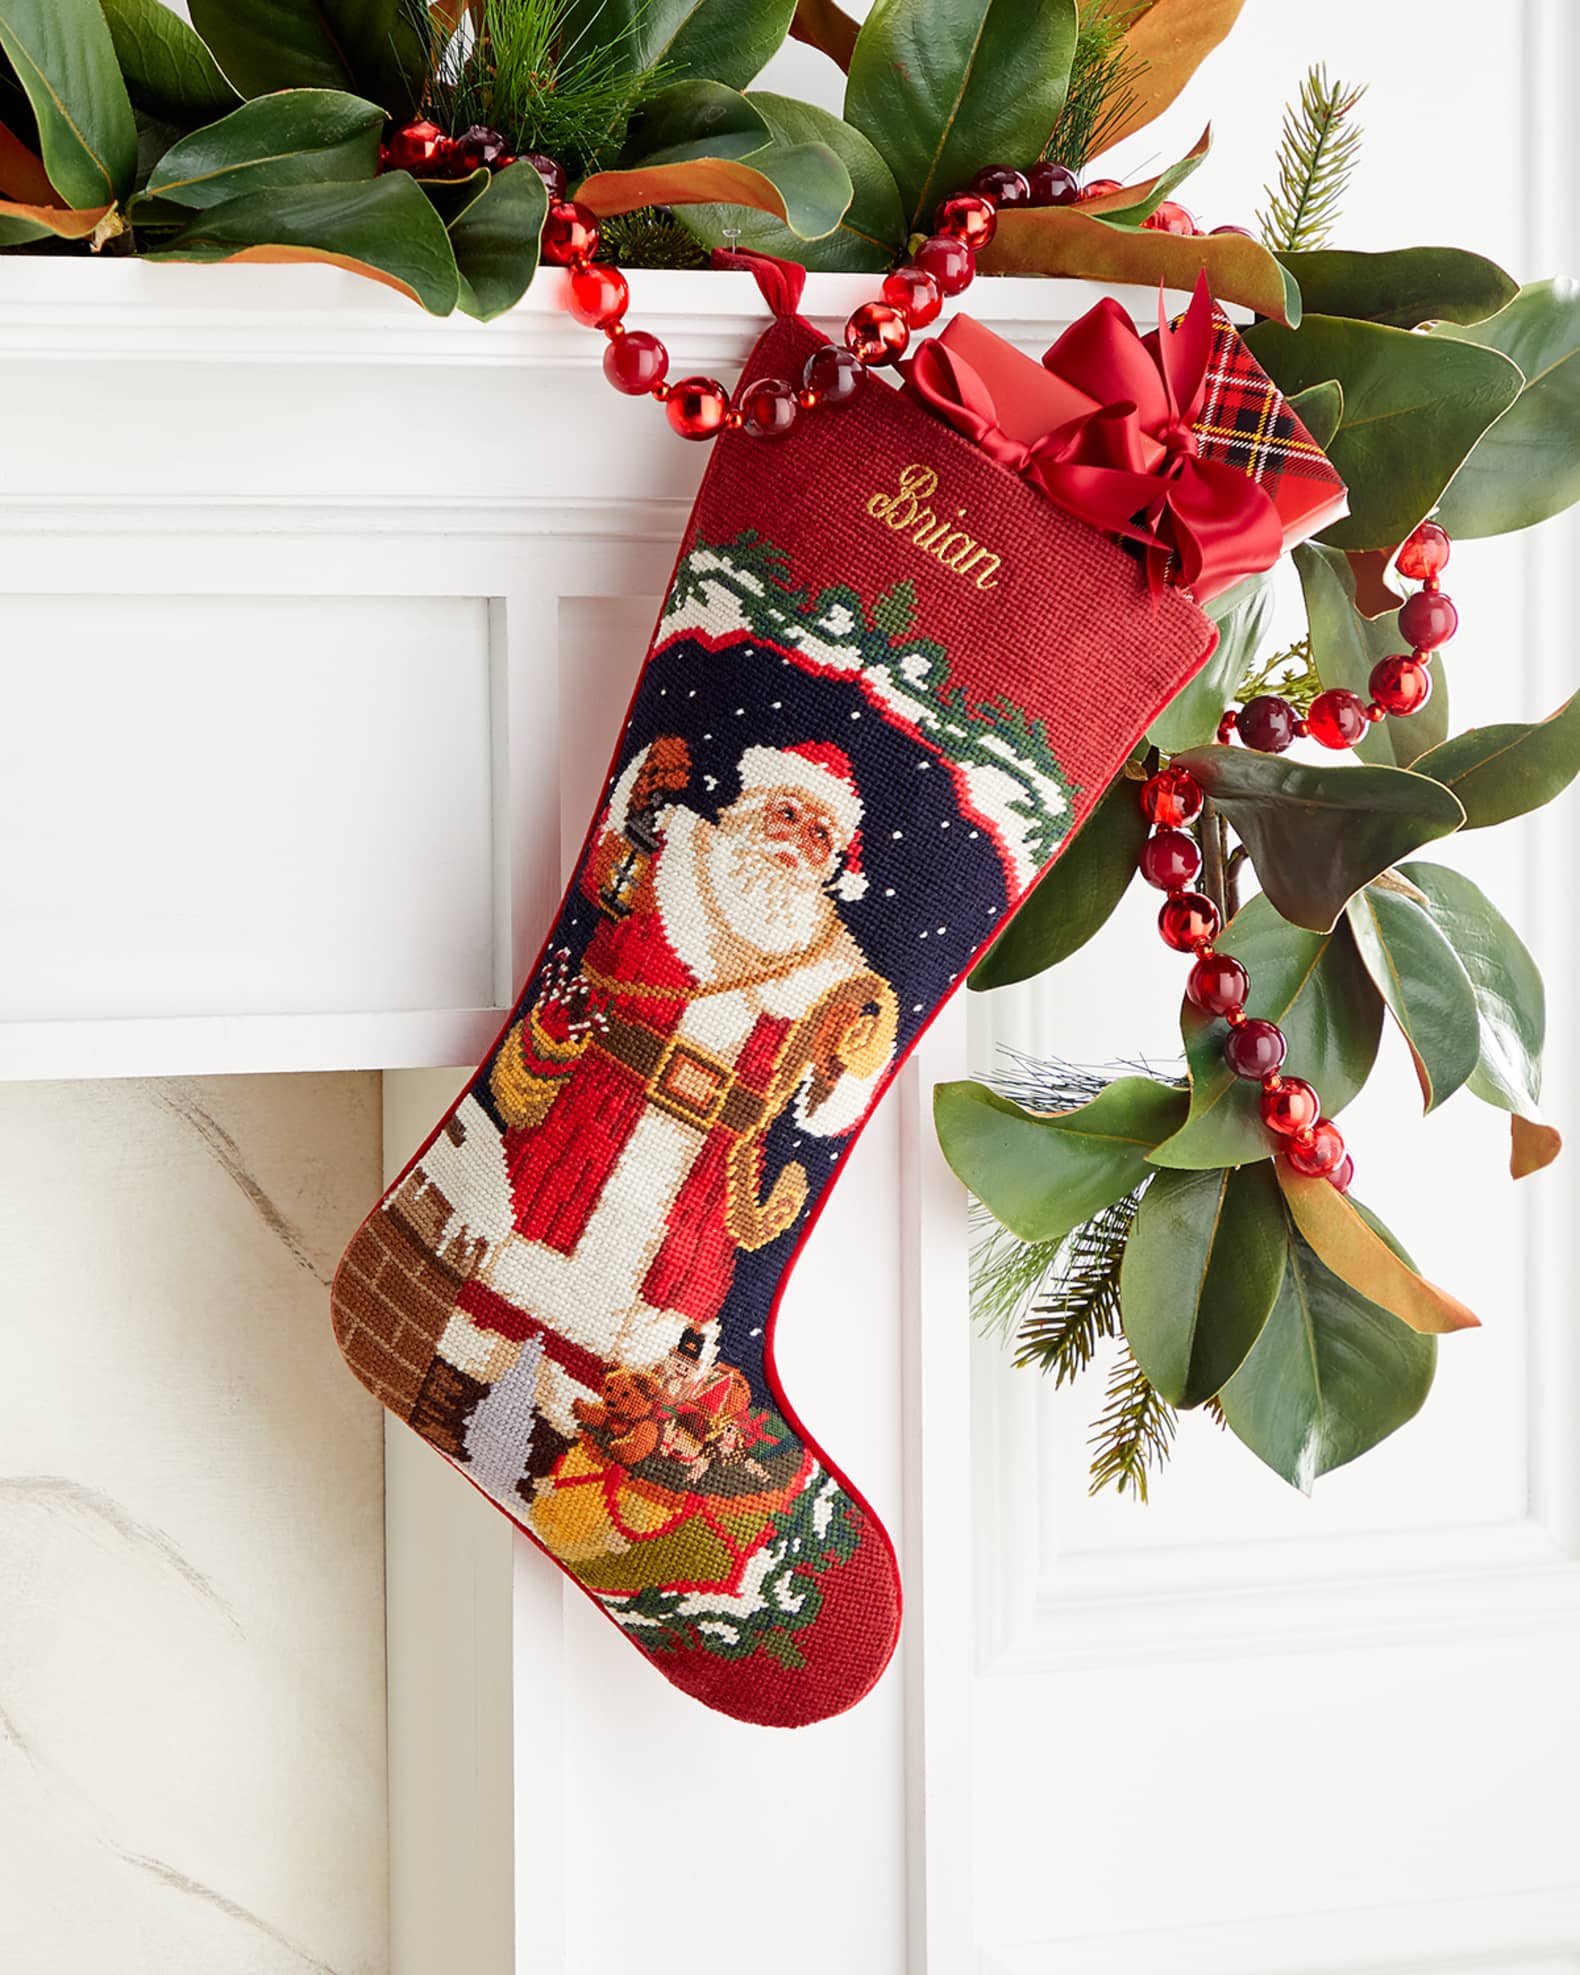 Needlepoint Personalized Christmas Stocking: Teddy Bear Santa Suit